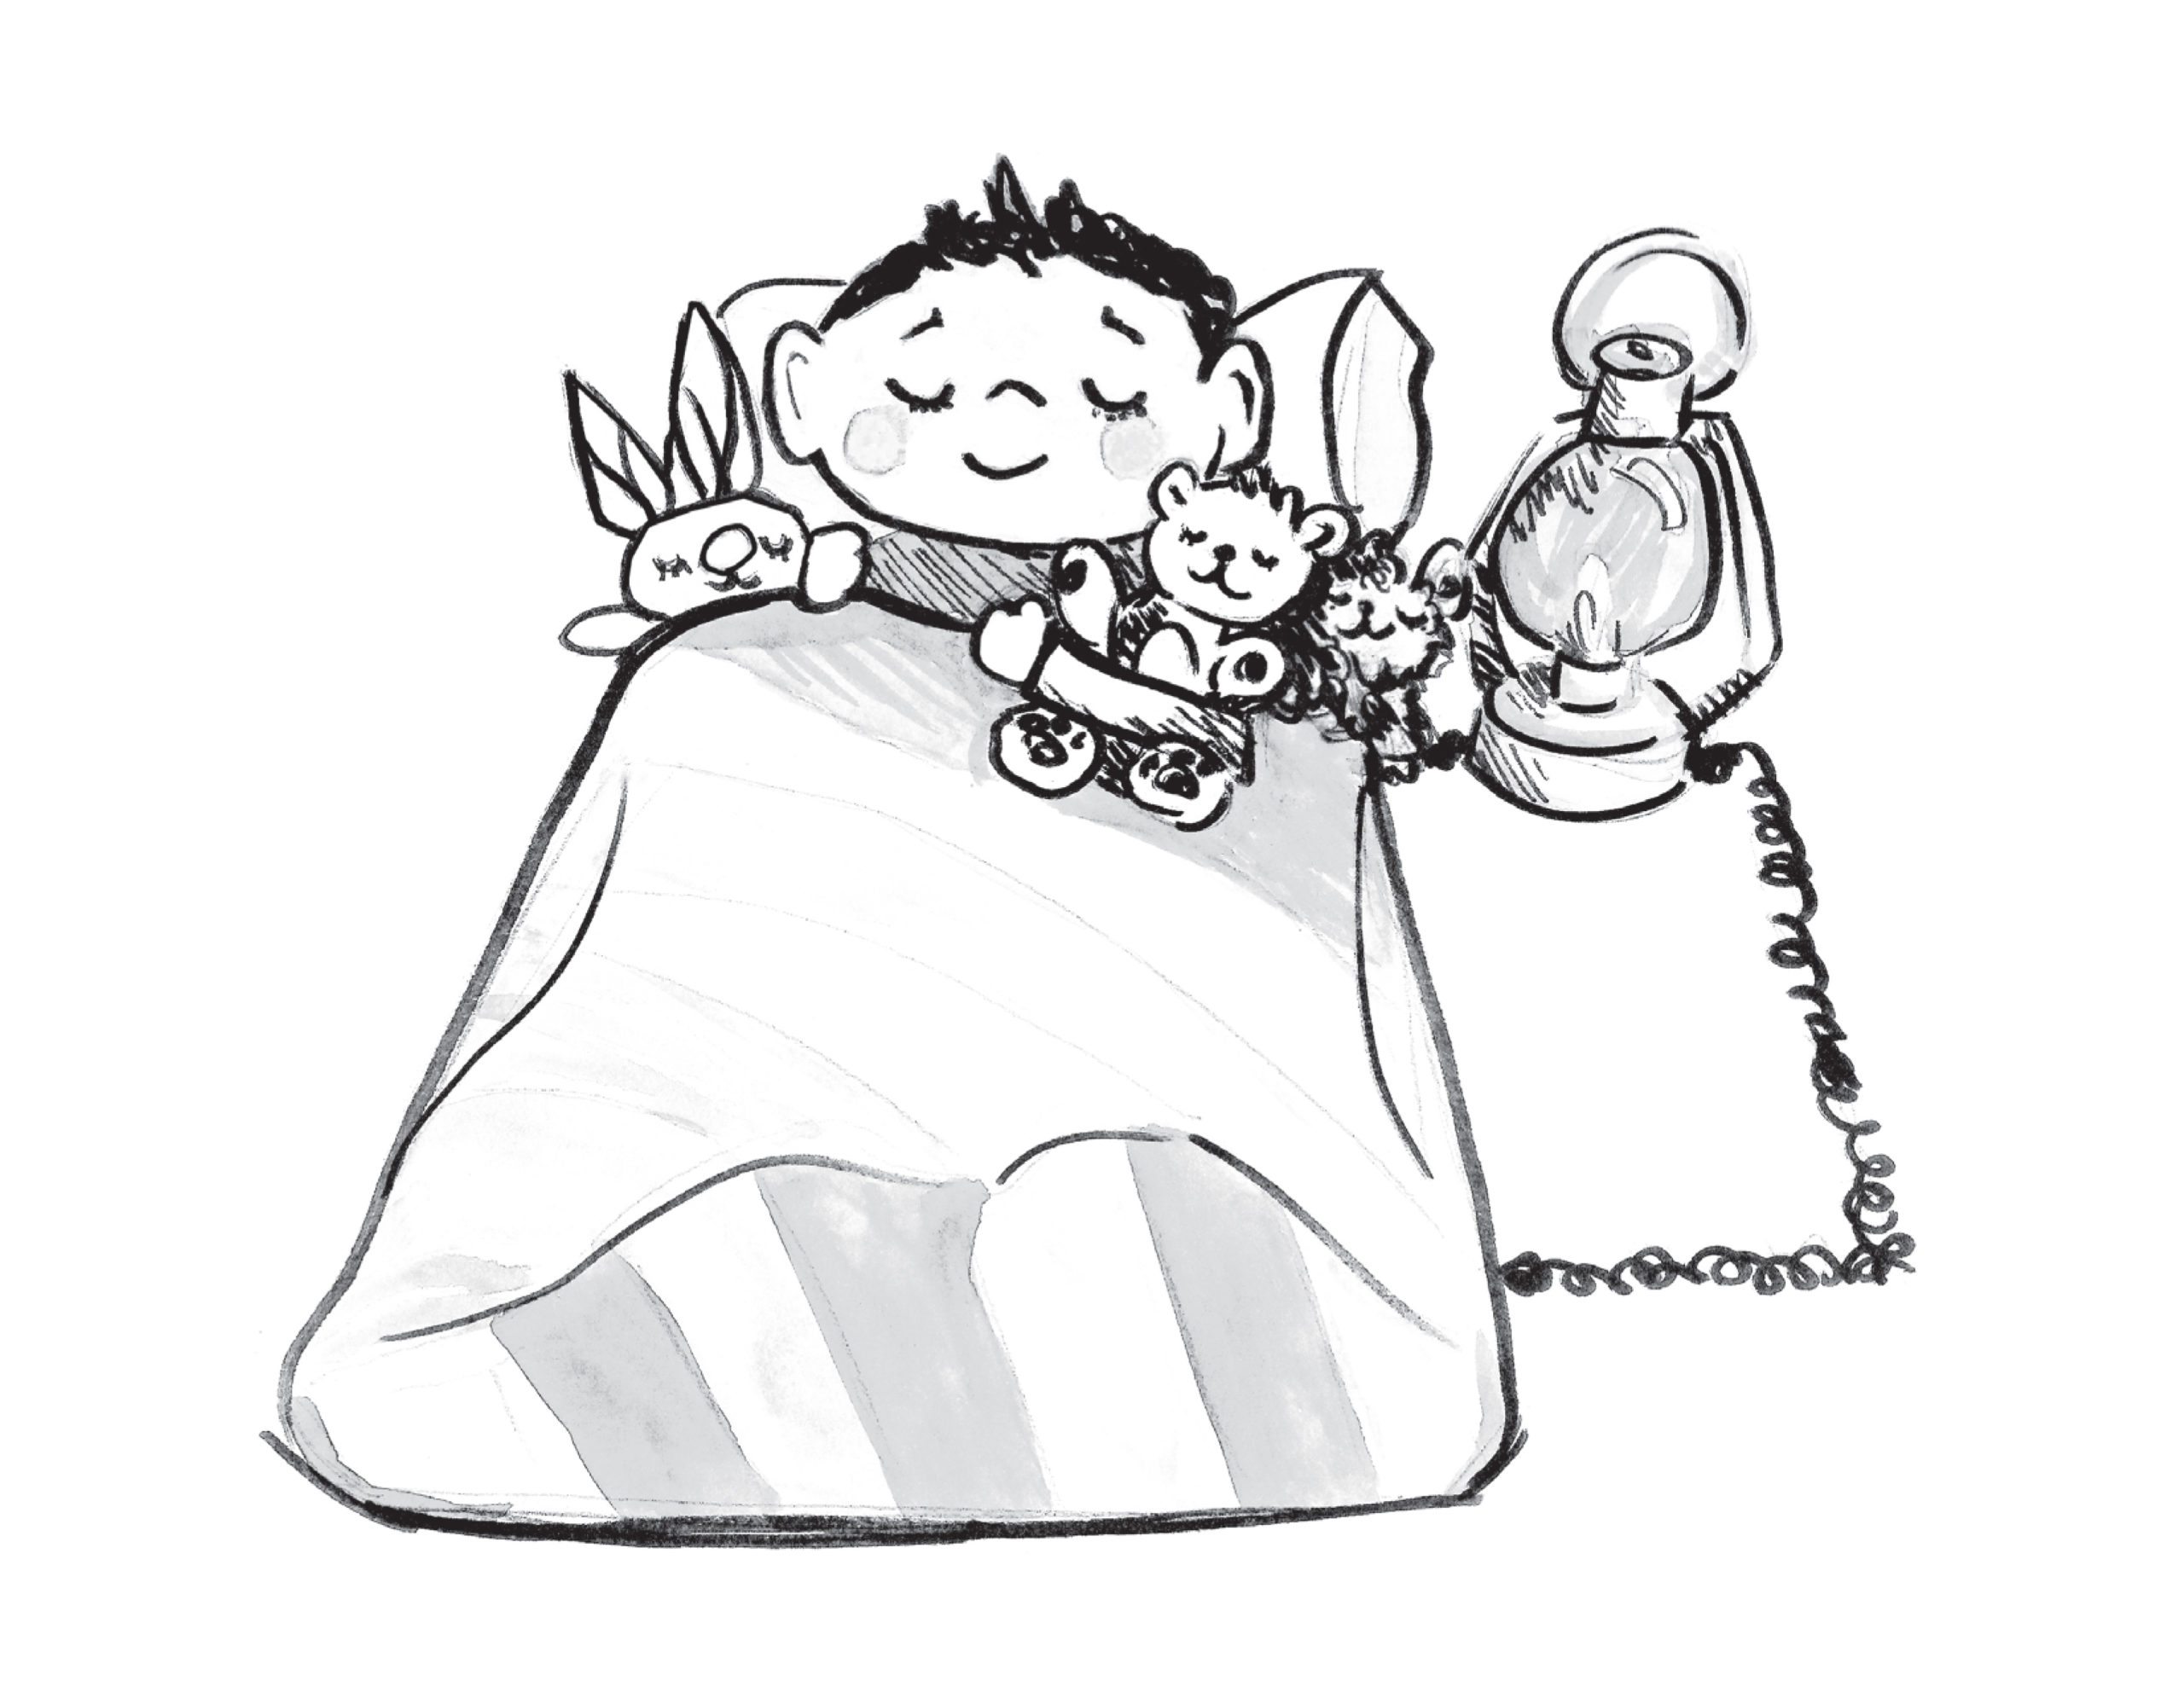 Child Sleeping in a sleeping bag with stuffed animals